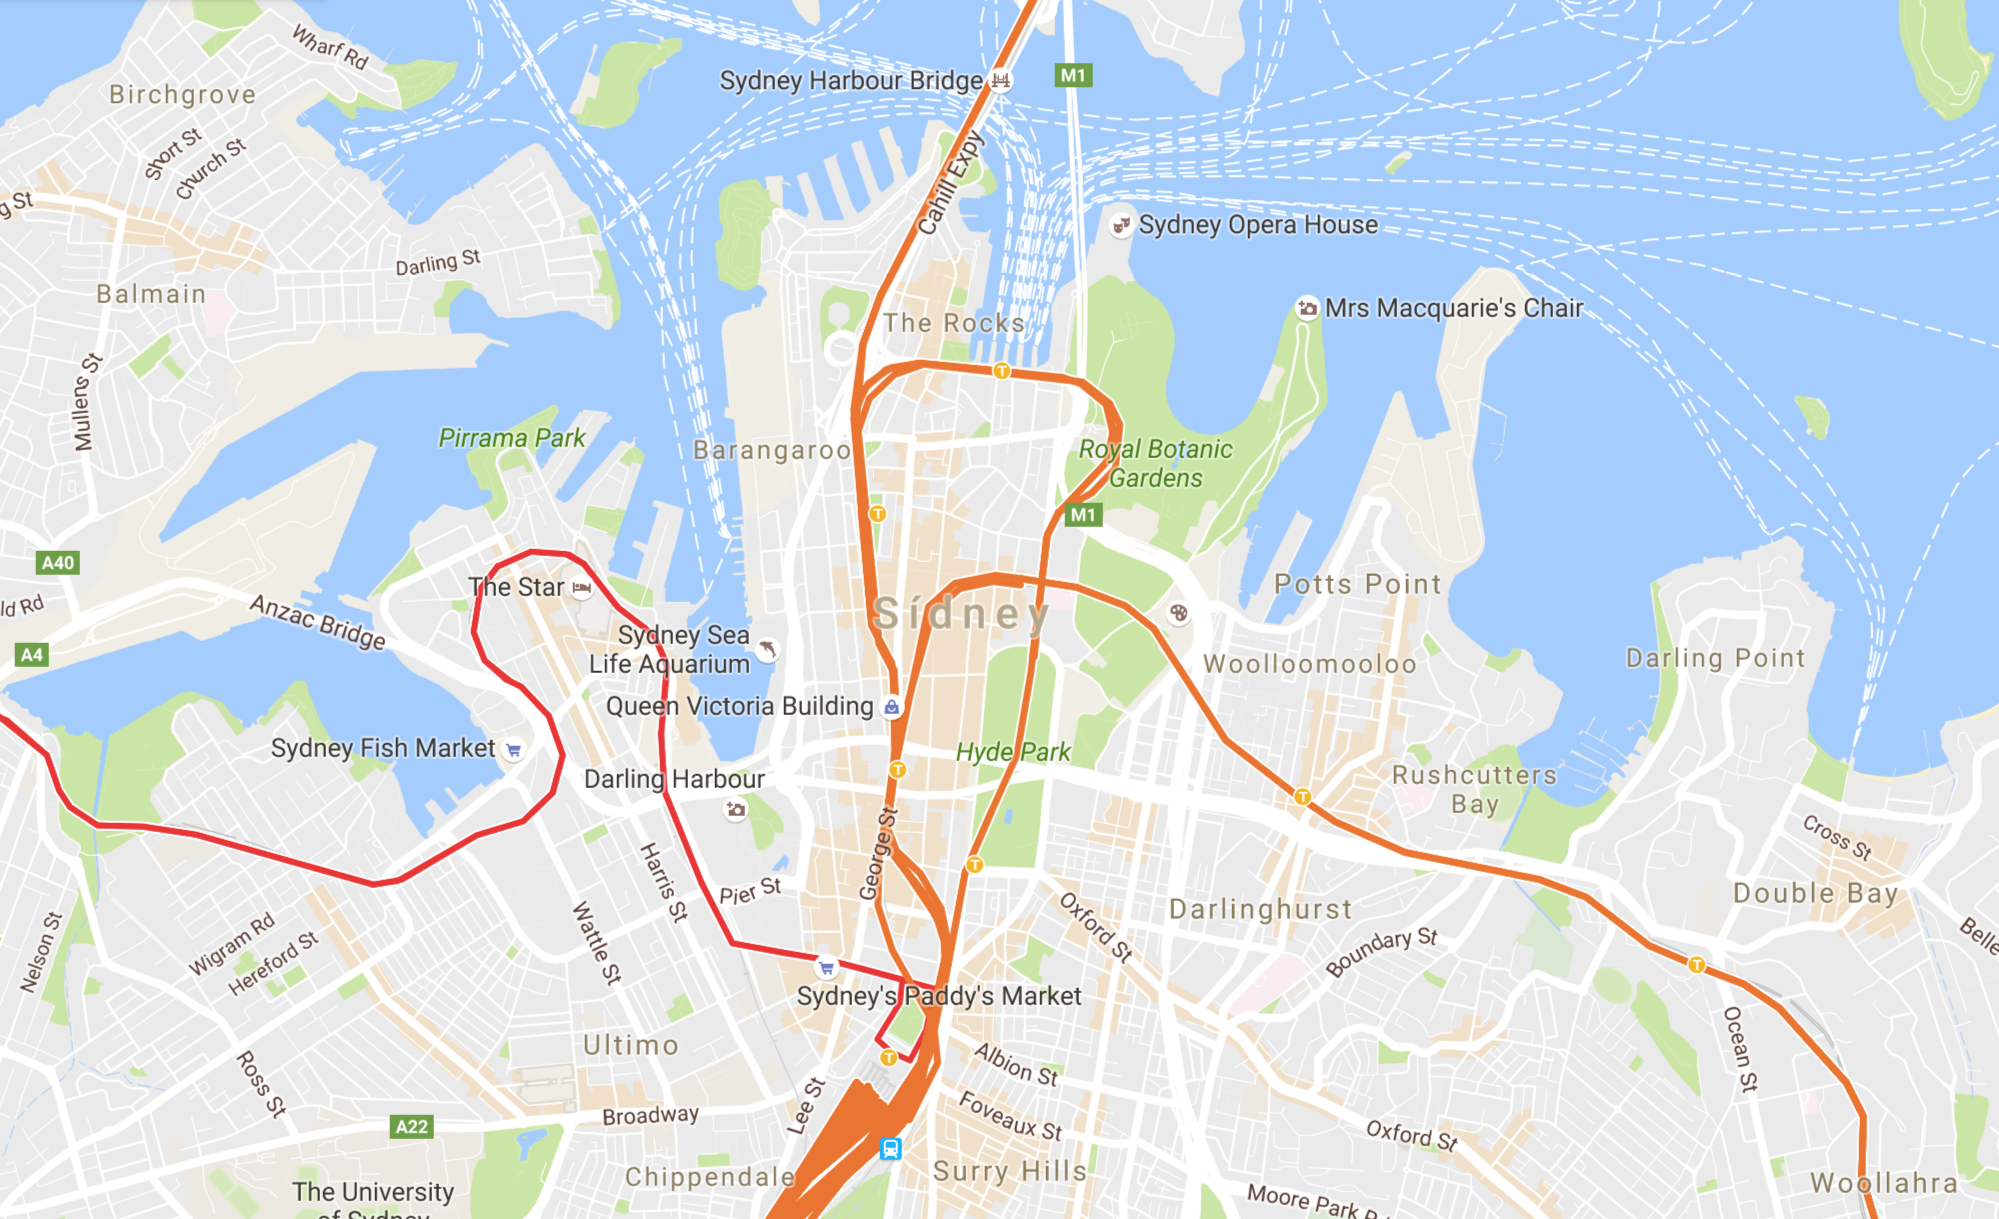 Sydney in Google Maps